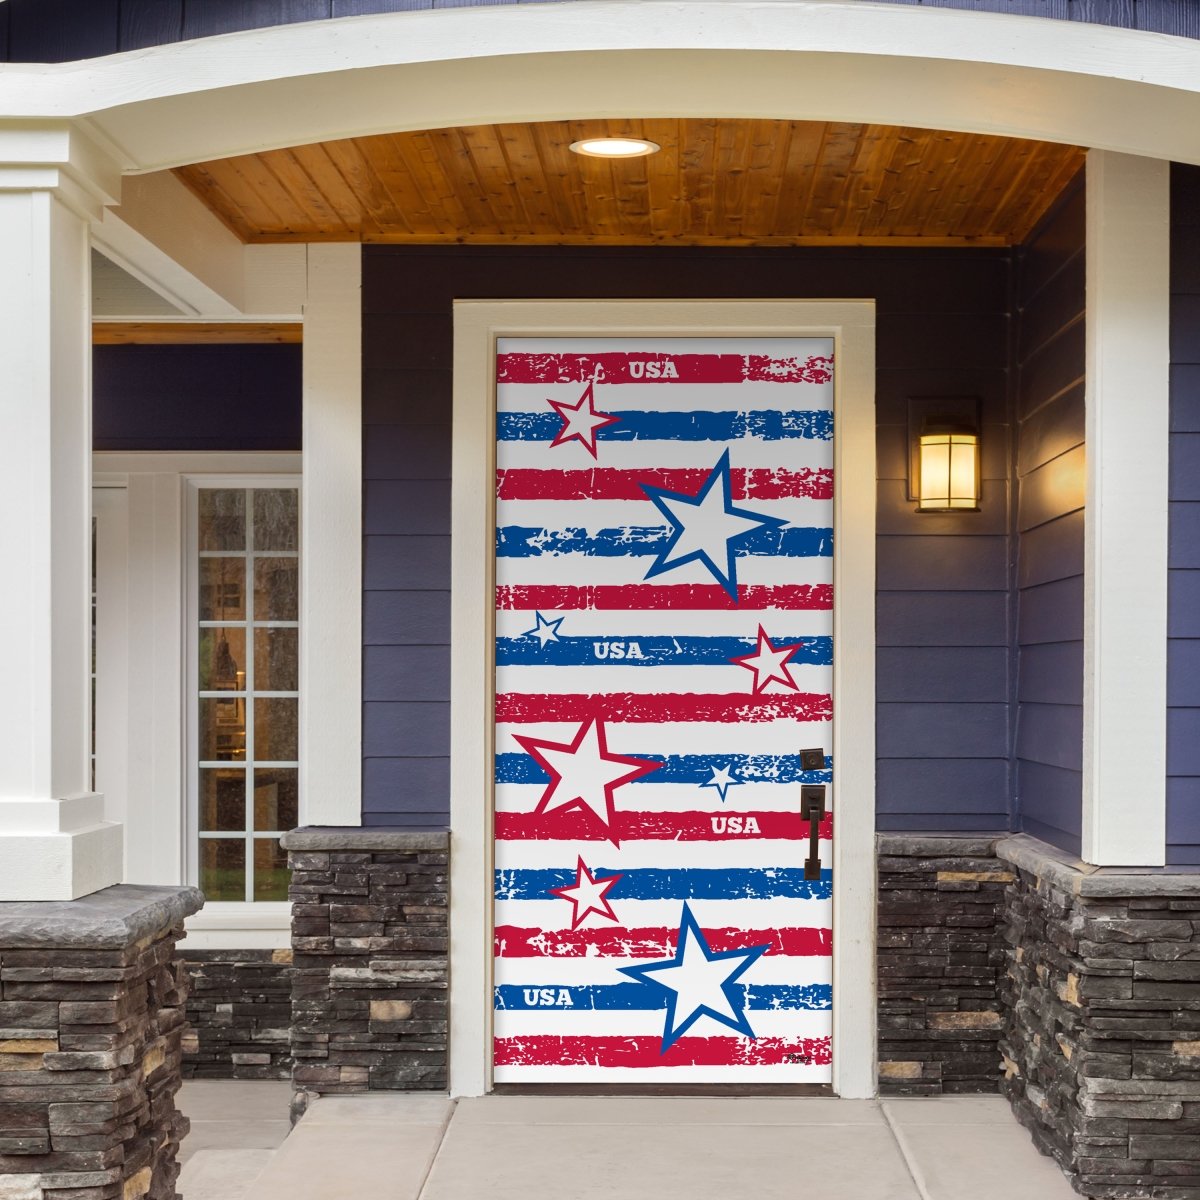 285906patr-003 36 X 80 In. Stars & Stripes Patriotic Front Door Mural Sign Banner Decor, Multi Color